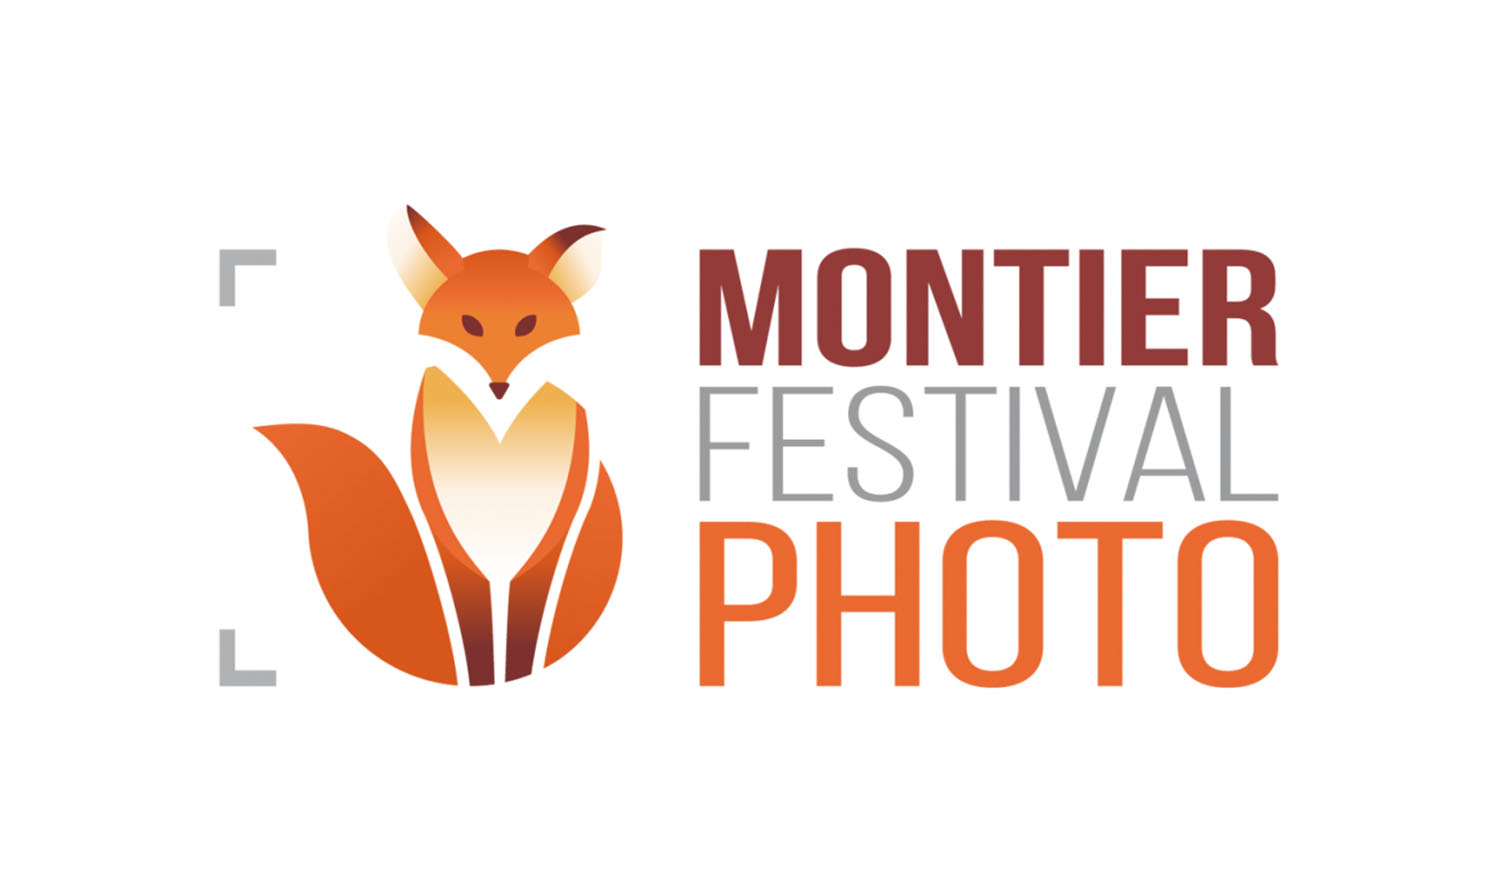 montier festival photo logo 01 1500px